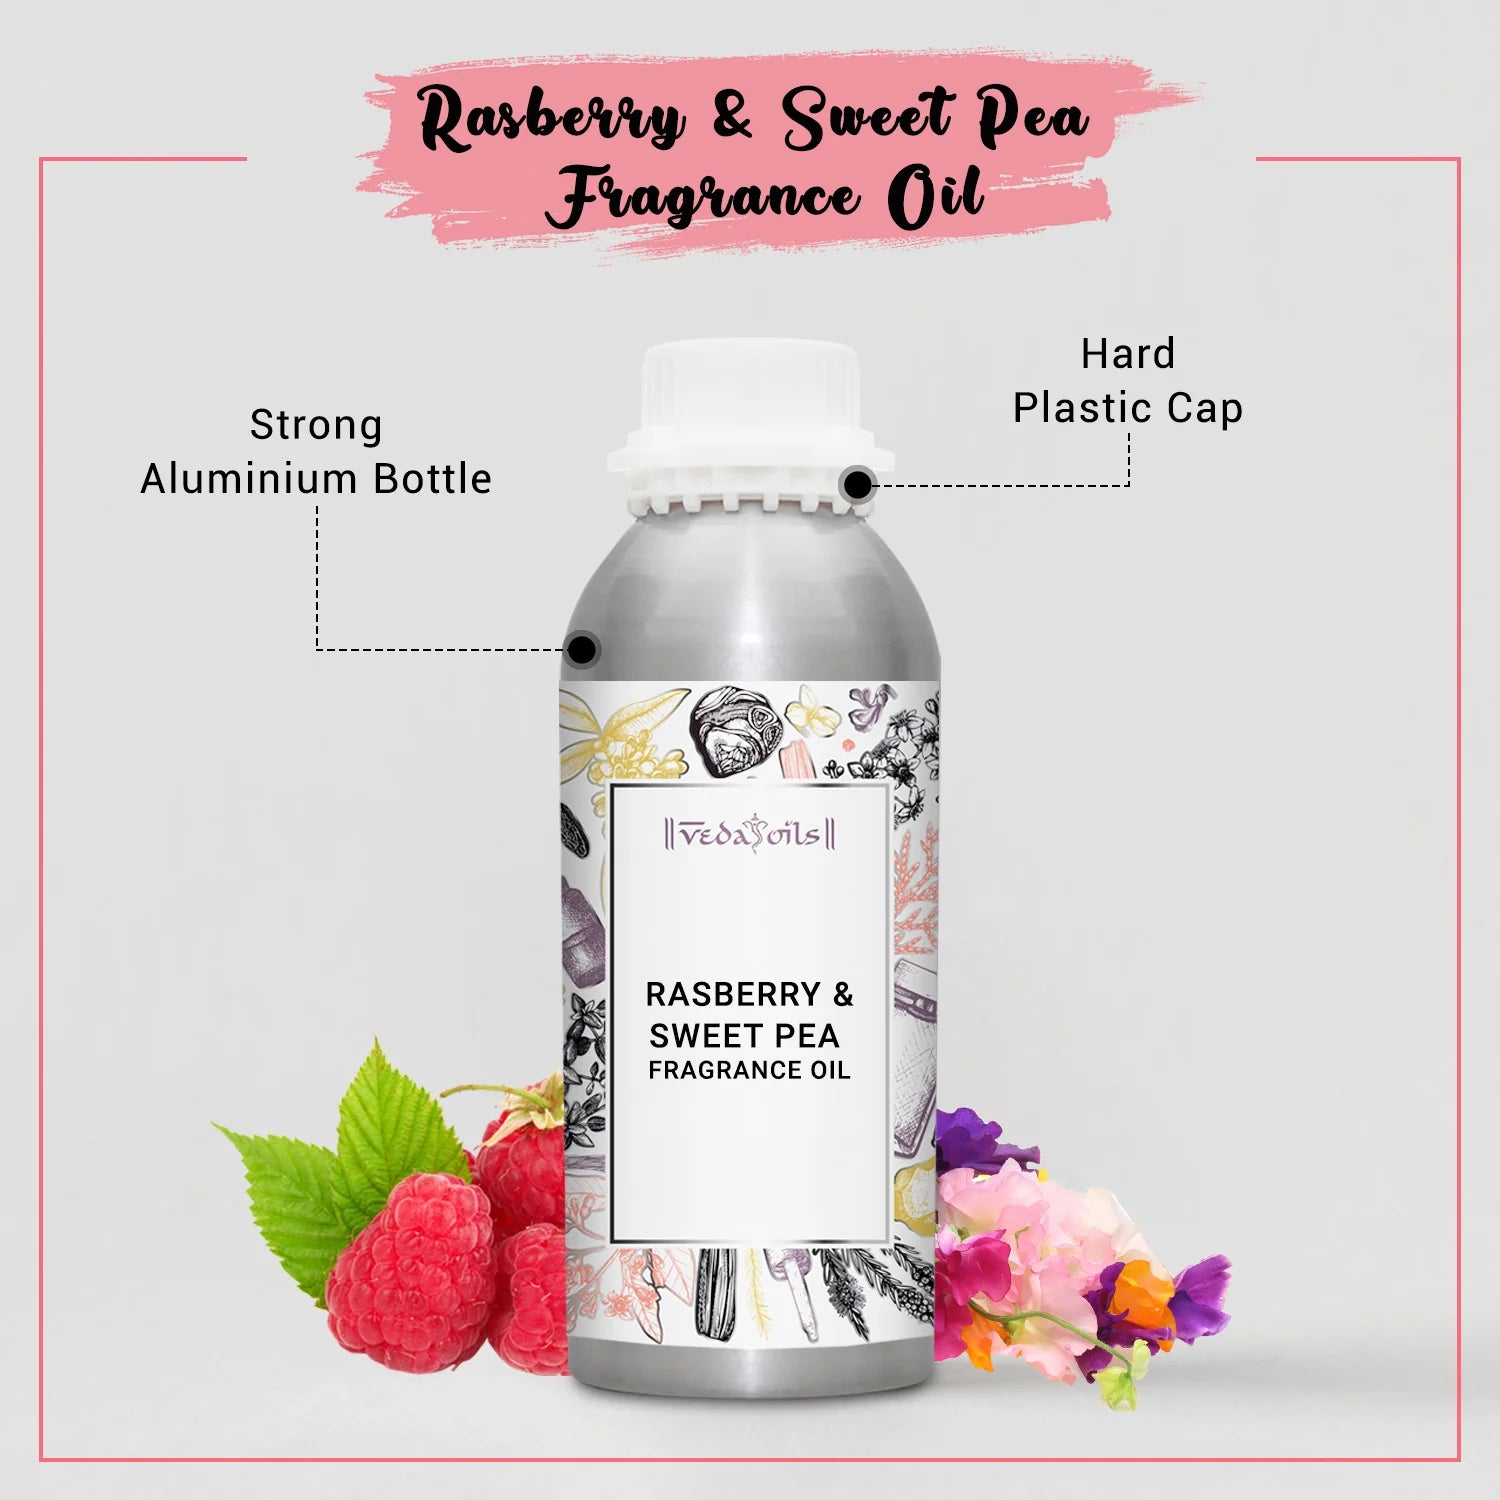 Raspberry & Sweet Pea Fragrance Oil